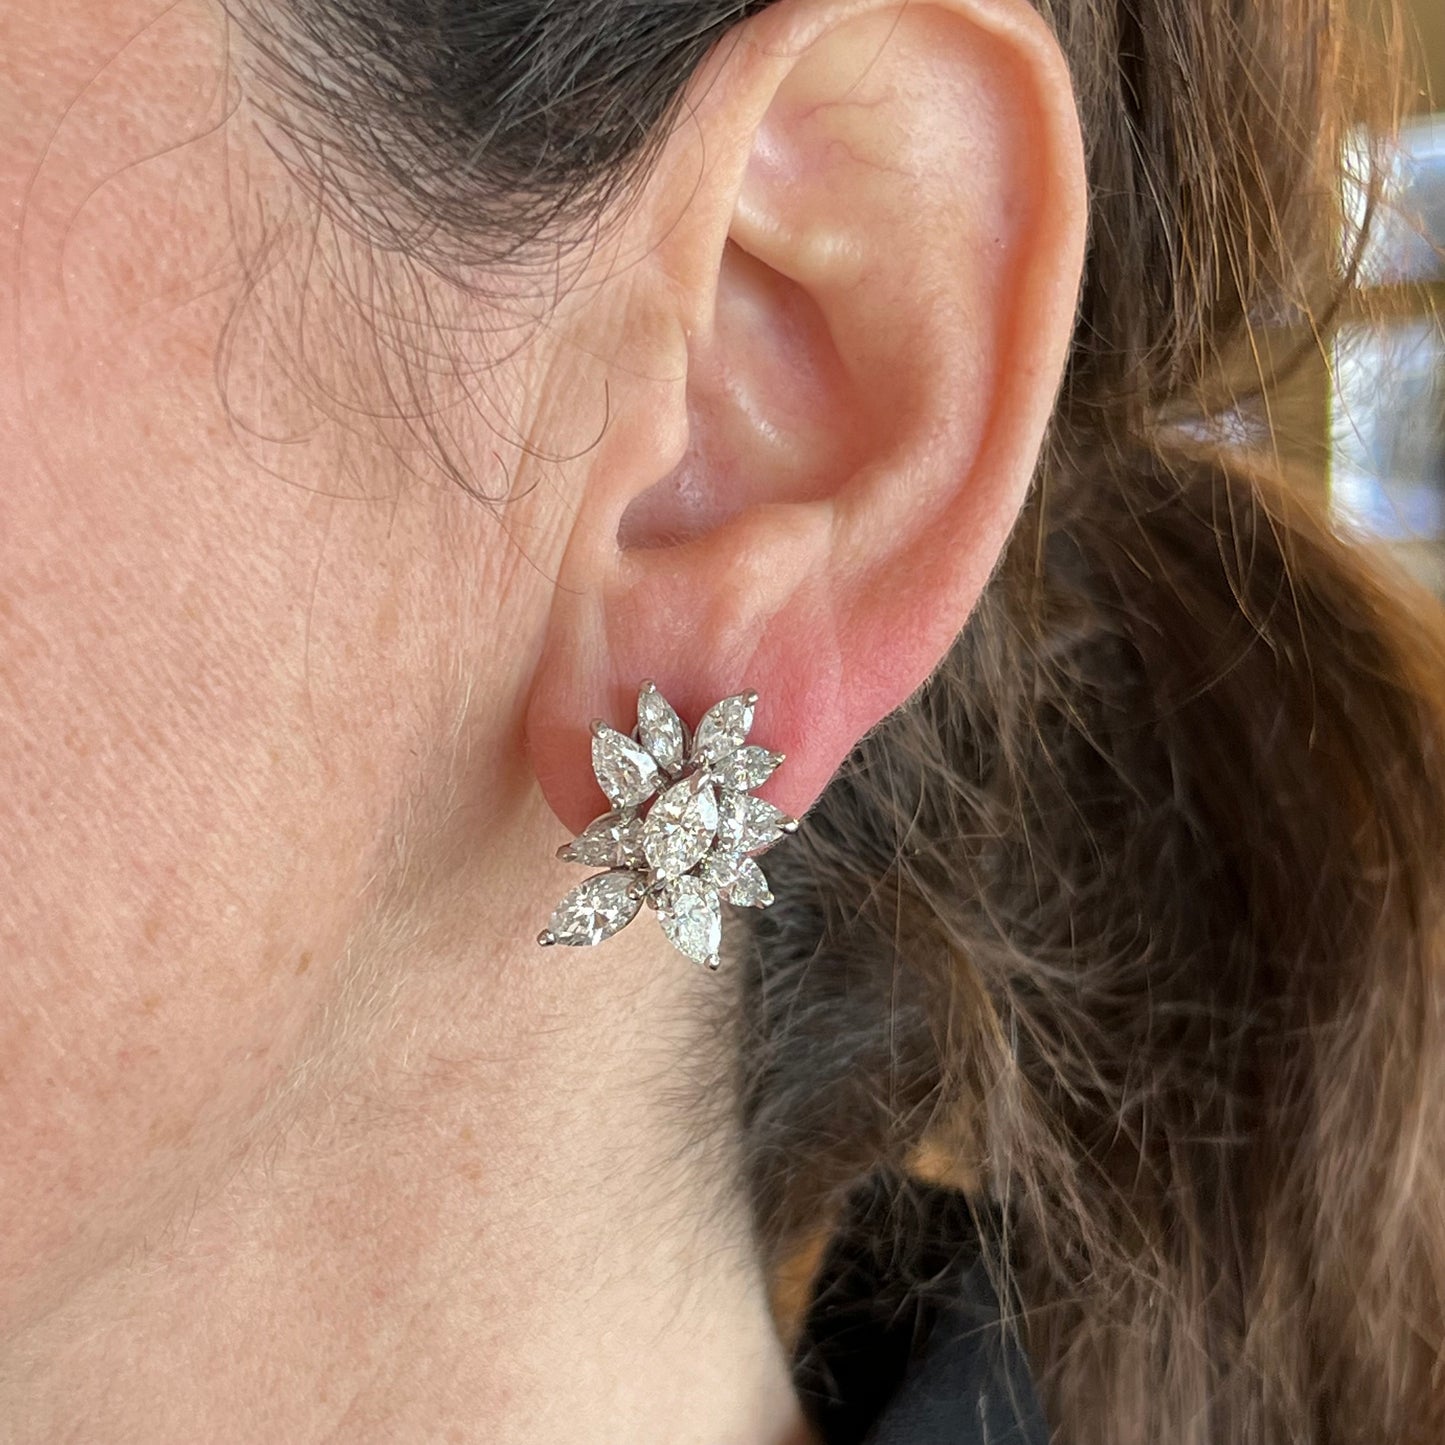 Pear & Marquise Diamond Cluster Stud Earrings in Platinum